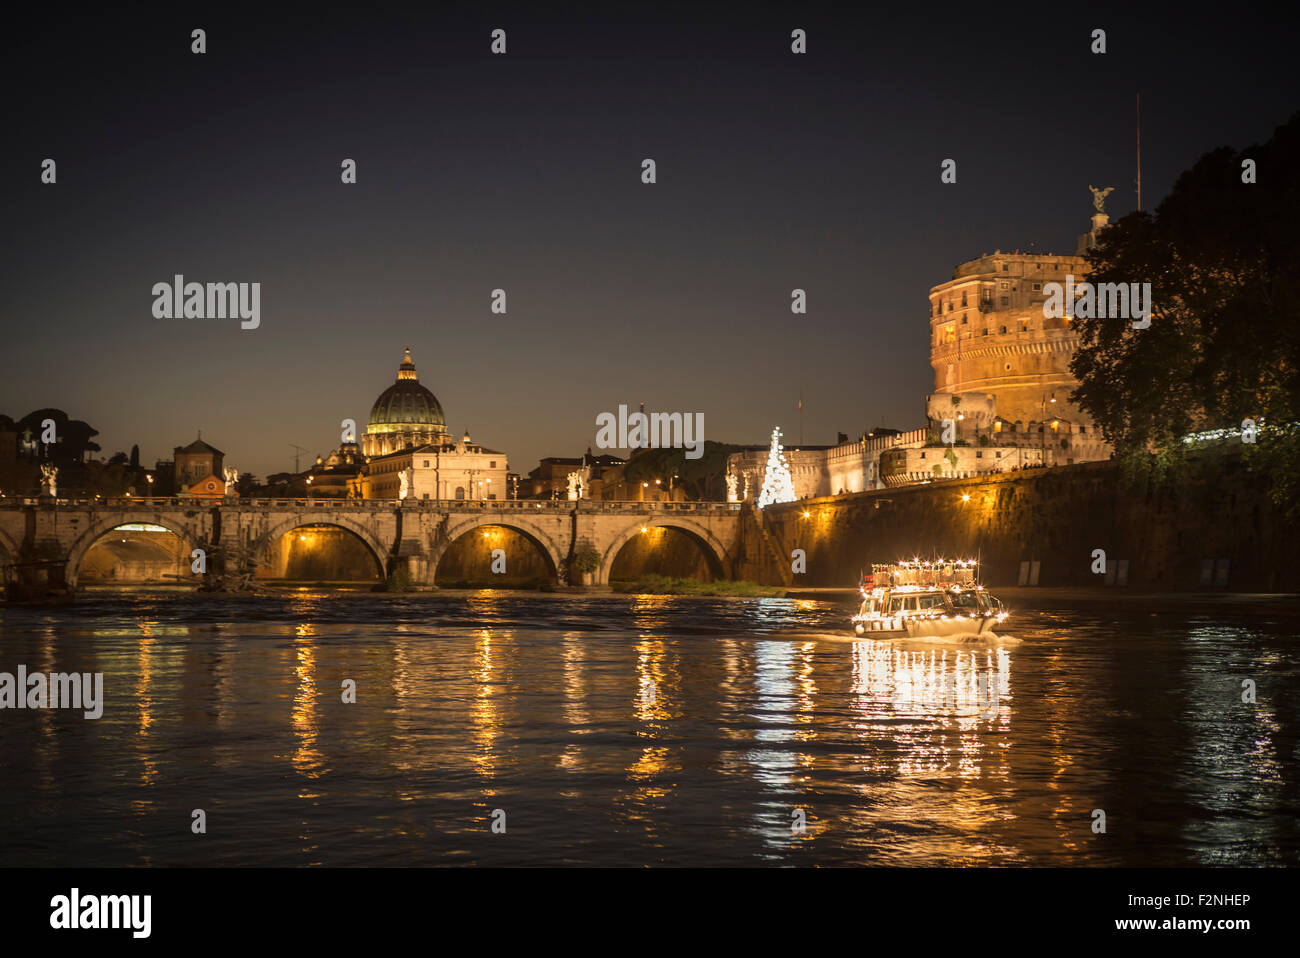 Illuminated bridge over river, Rome, Italy Stock Photo